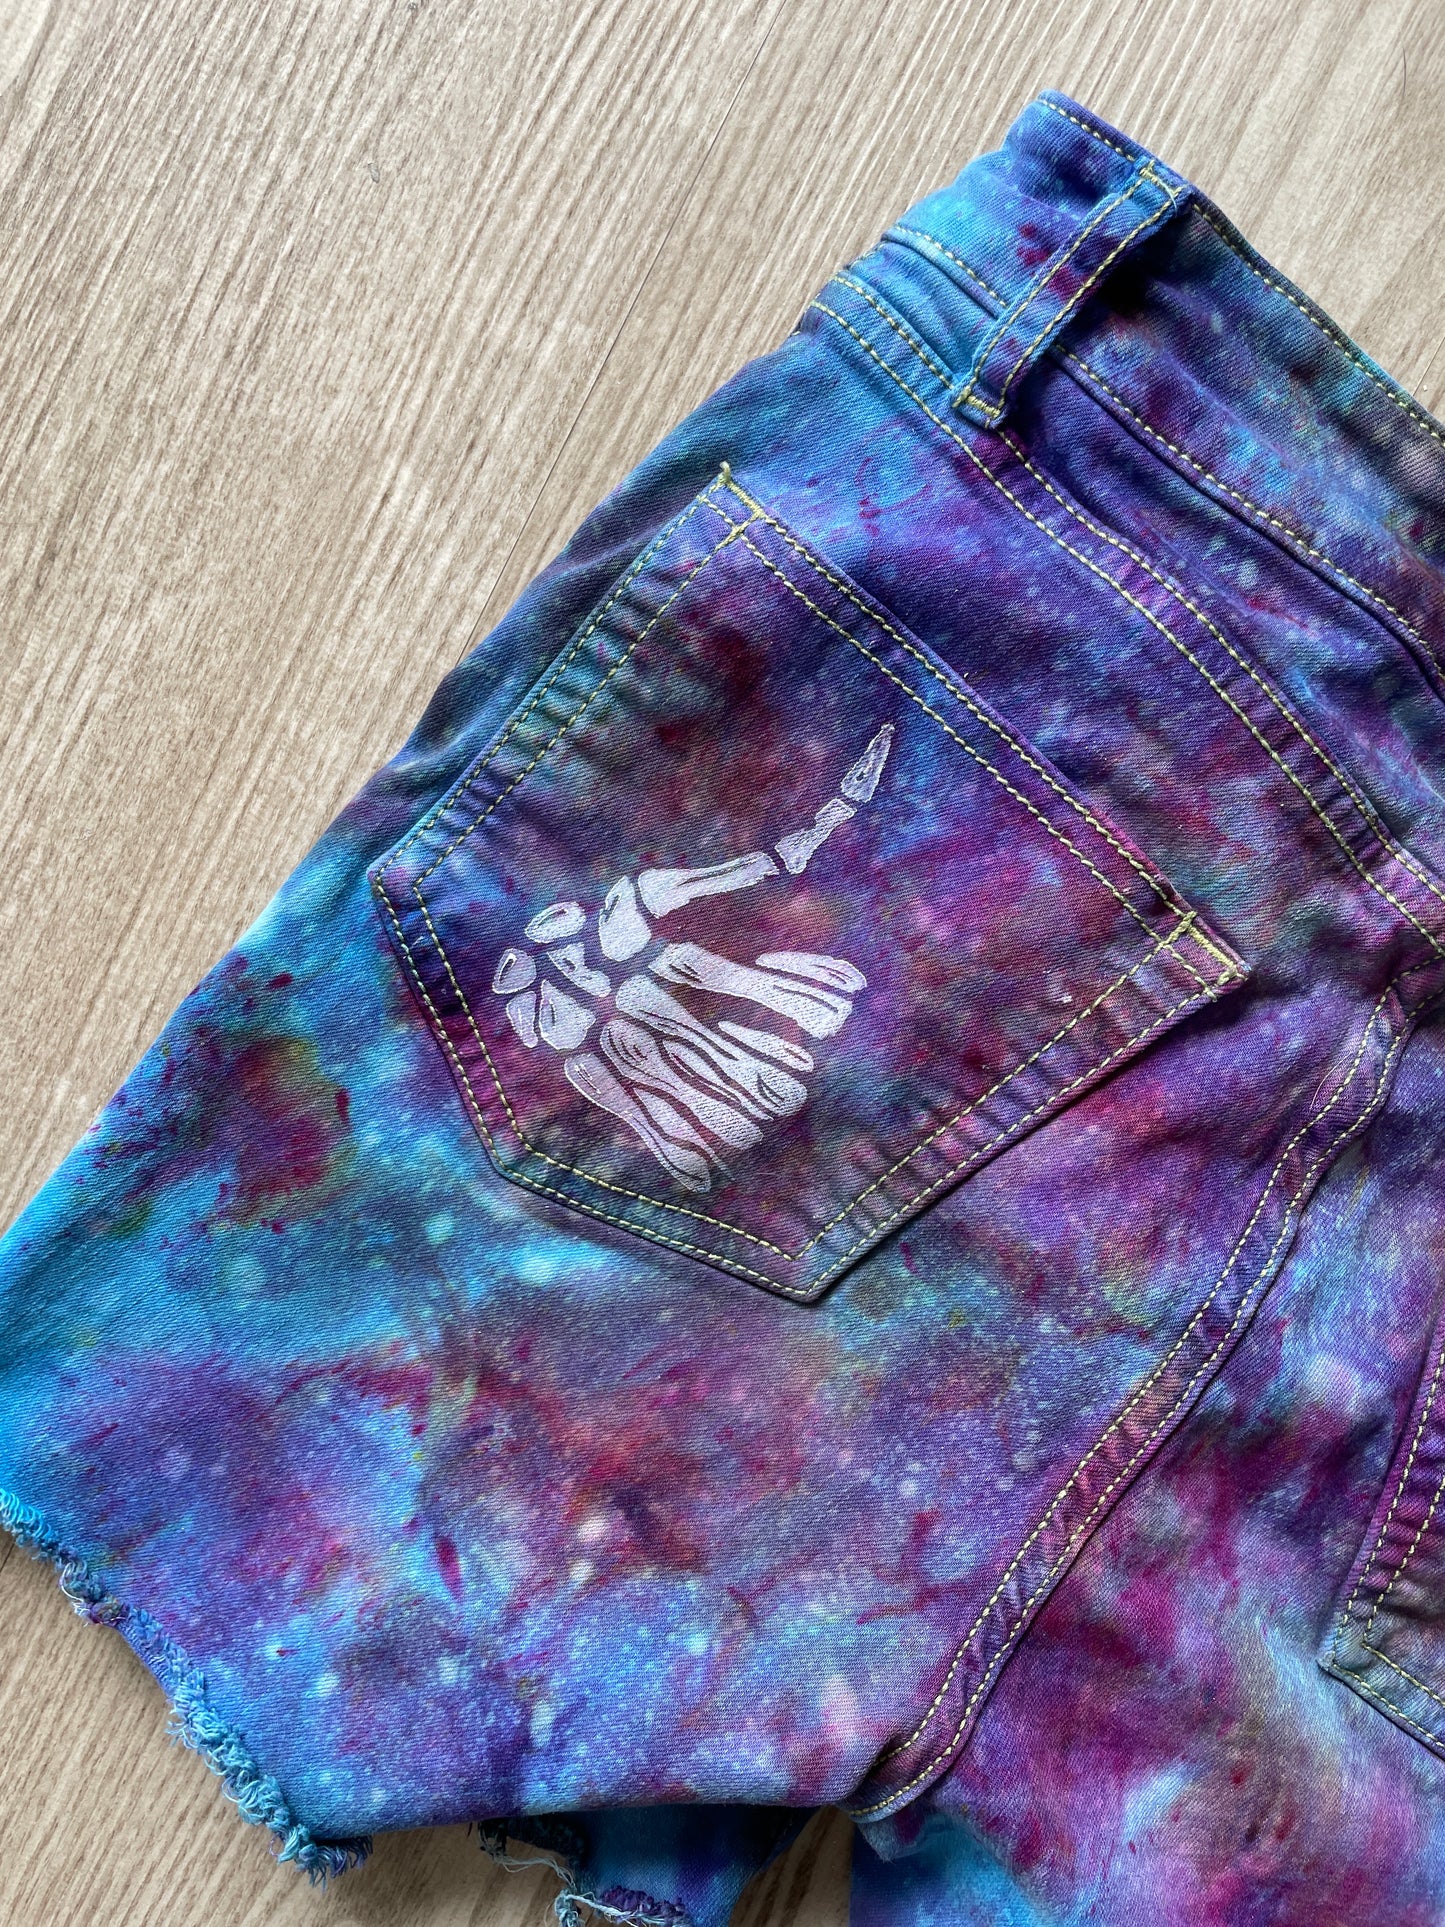 Women's Size 26 Ripton Galaxy Dye Cutoff Jorts | Blue Galaxy Ice Dye Tie Dye Shorts with Handprinted Graphics